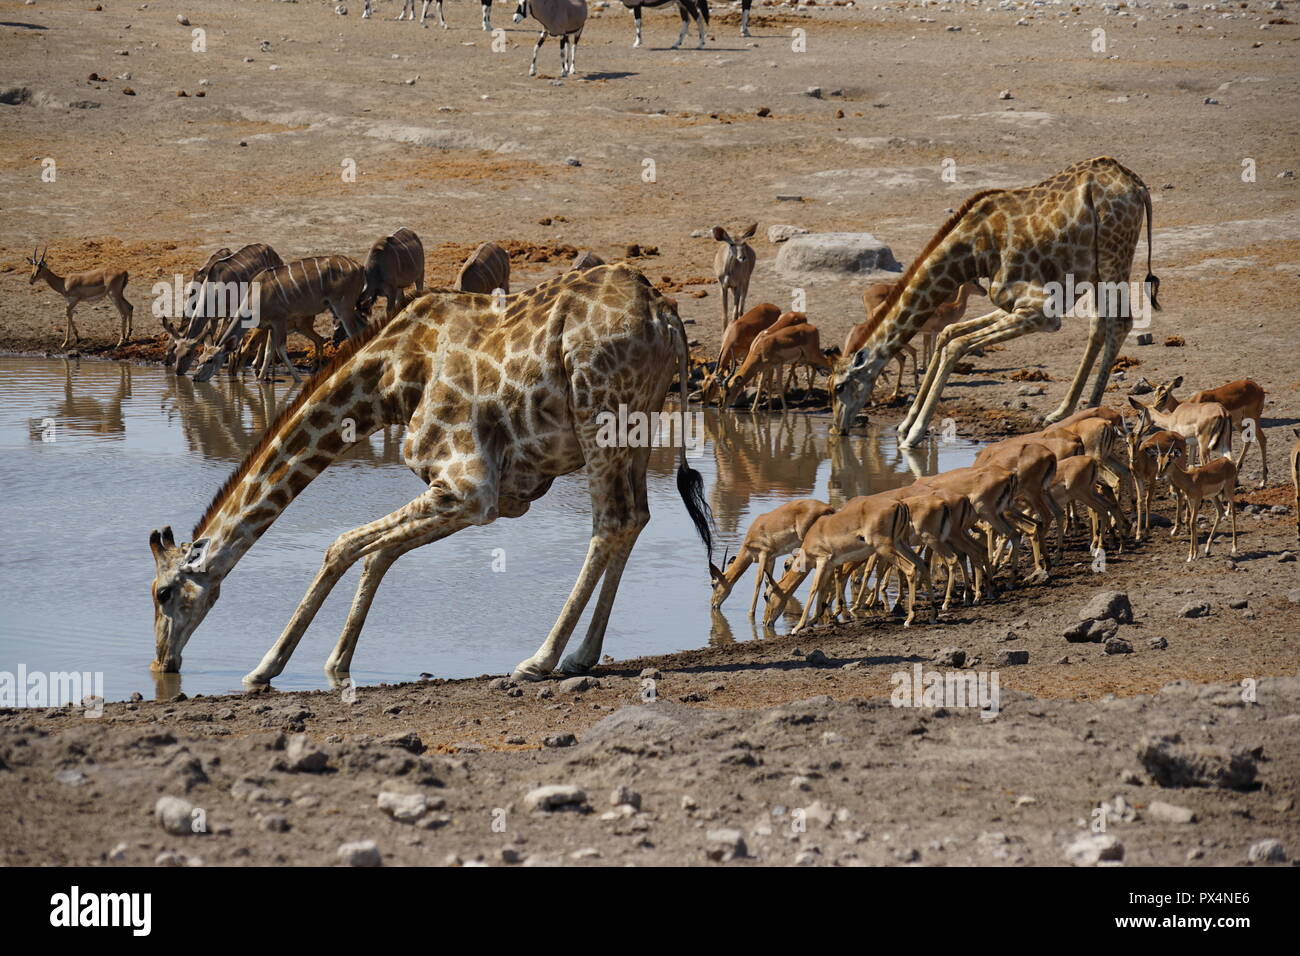 Giraffen und andere Tiere am Wasserloch 'Chudob' Etosha Nationalpark, Namibia Namibia, Afrika Foto Stock